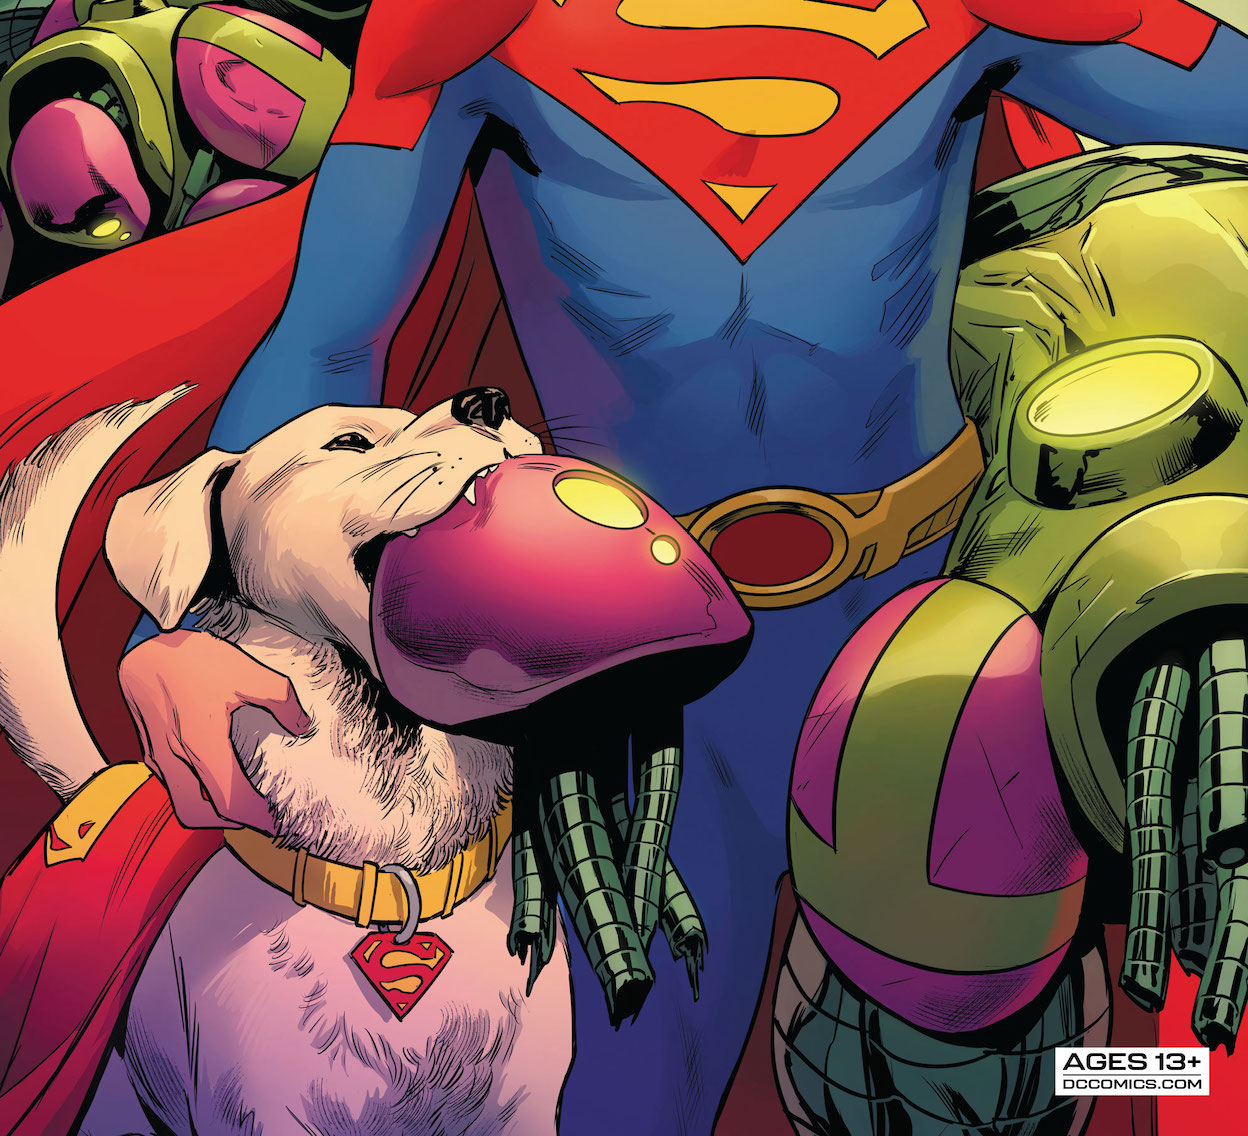 'Superman: Son of Kal-El' #12 blends realism with the fantastical